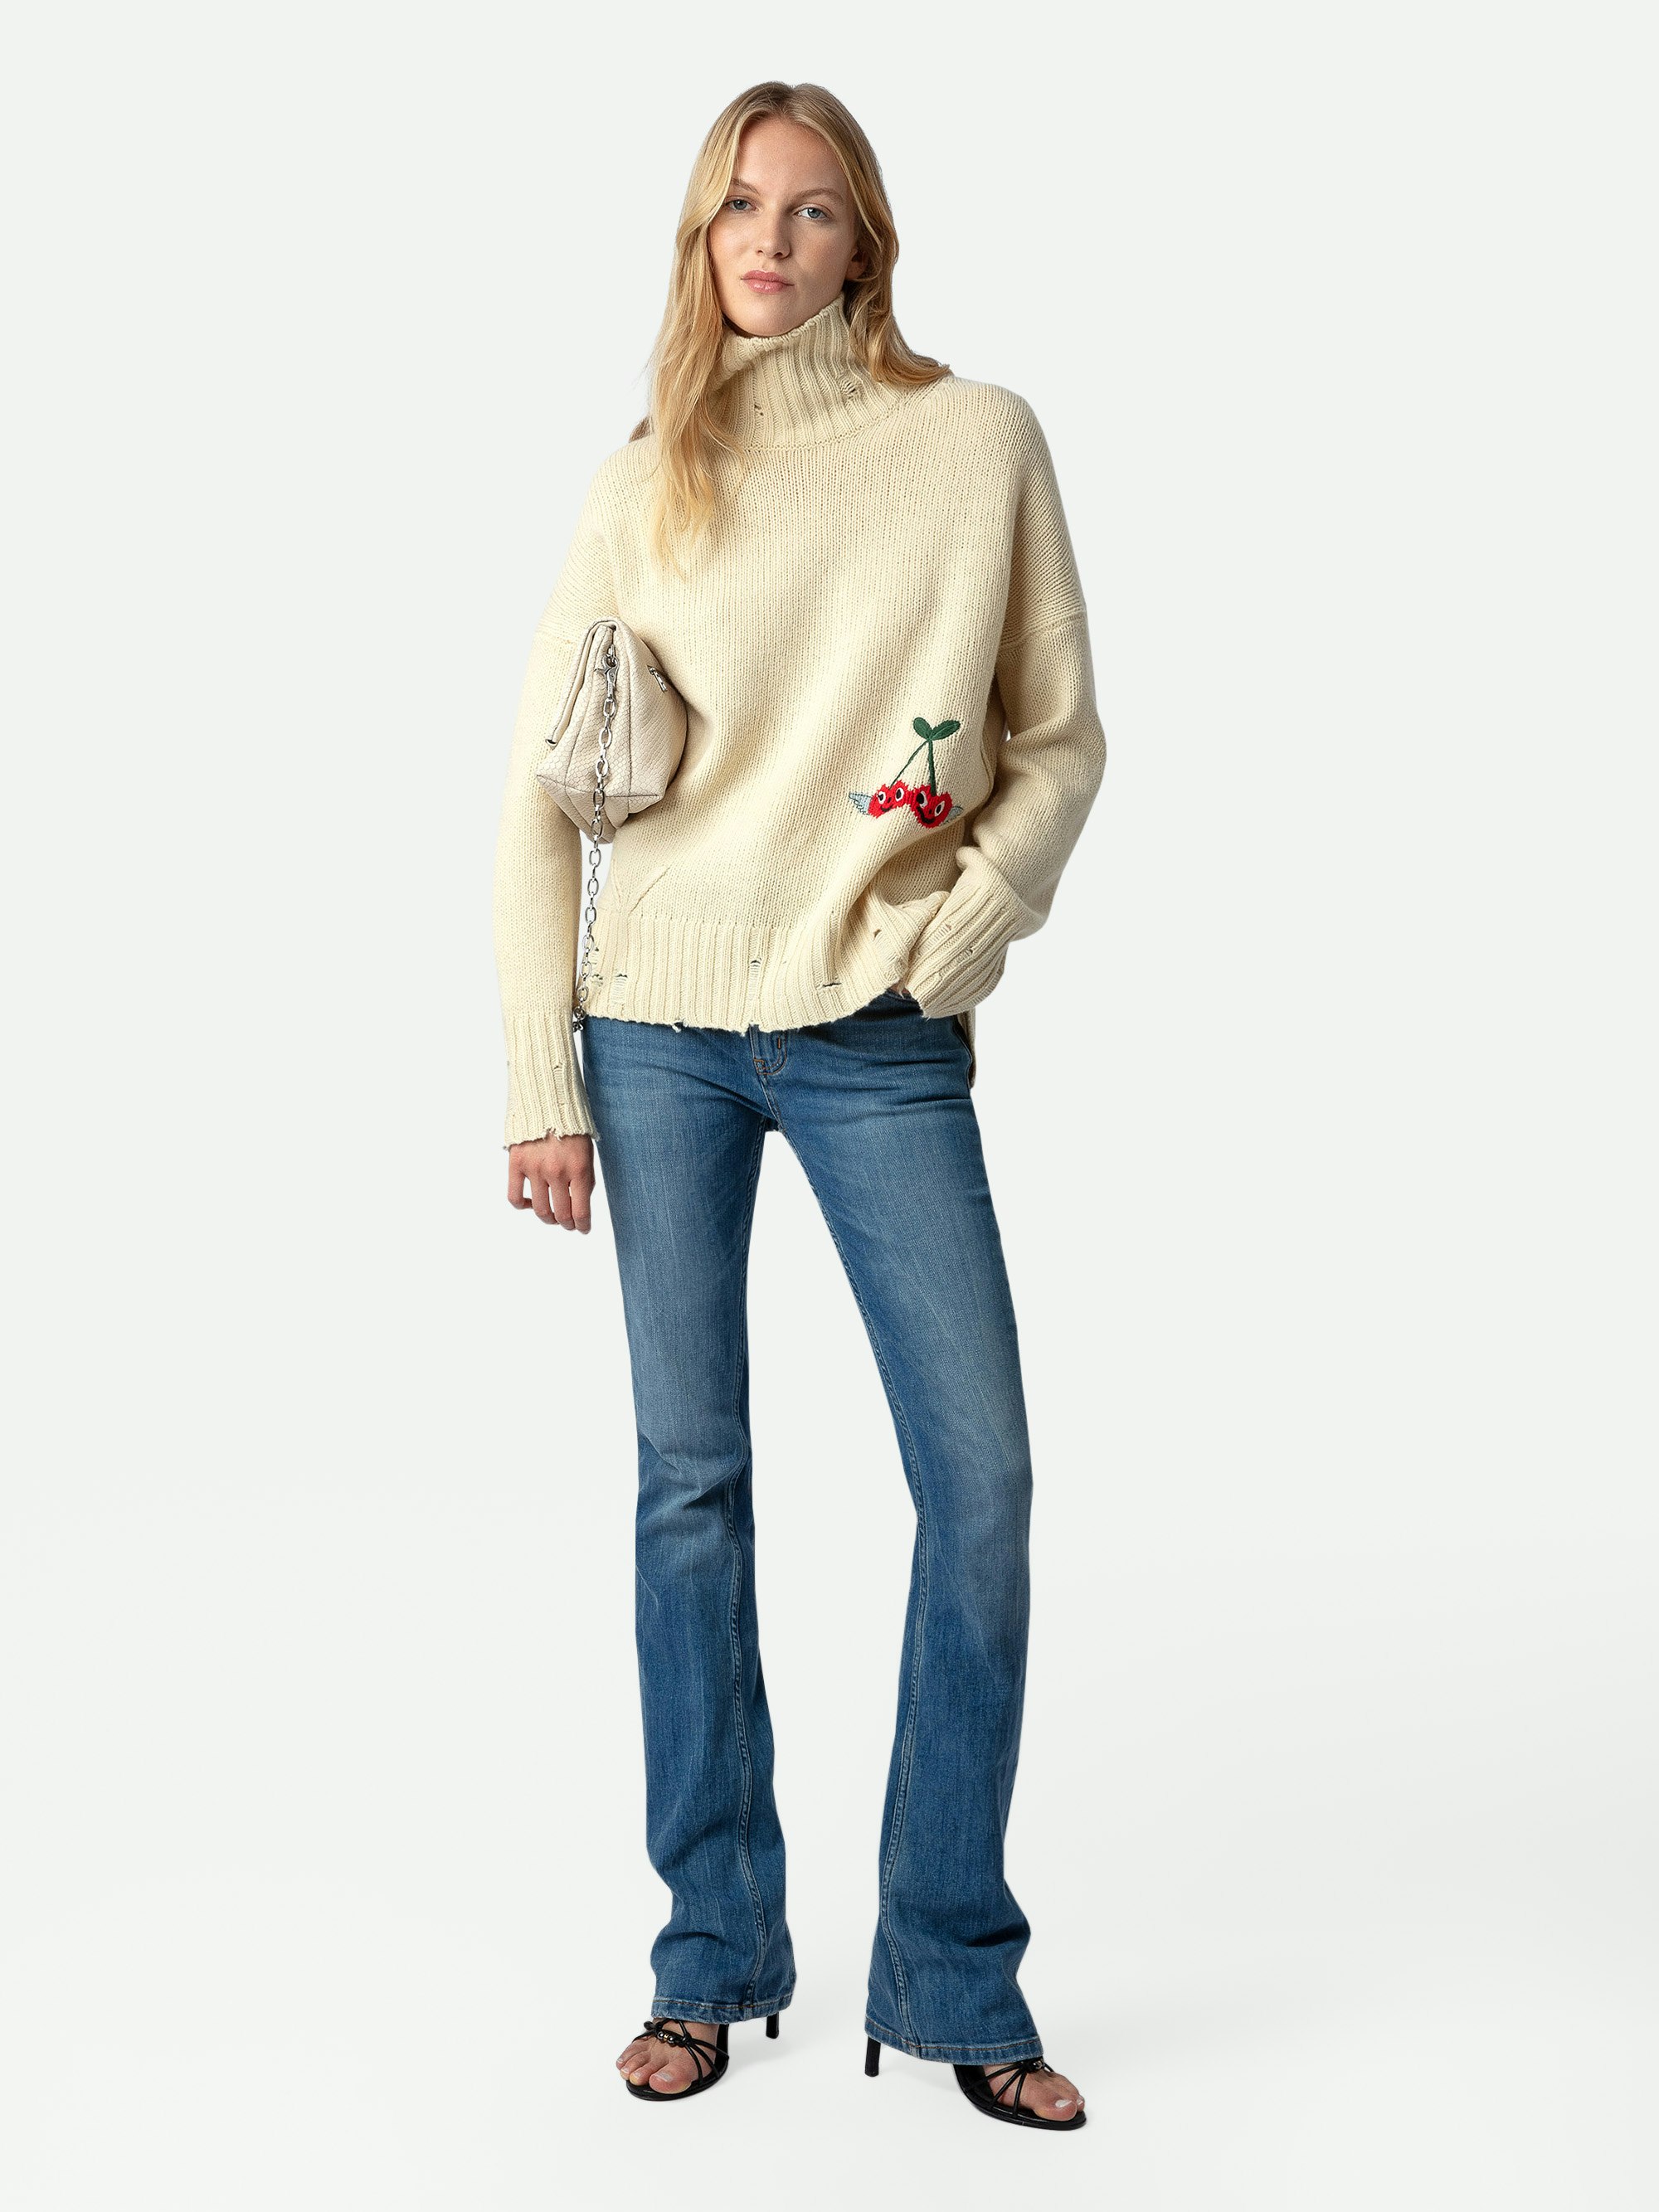 Bleeza Sweater - Ecru distressed-effect merino wool sweater with mock neck and customized detailed designed by Humberto Cruz.